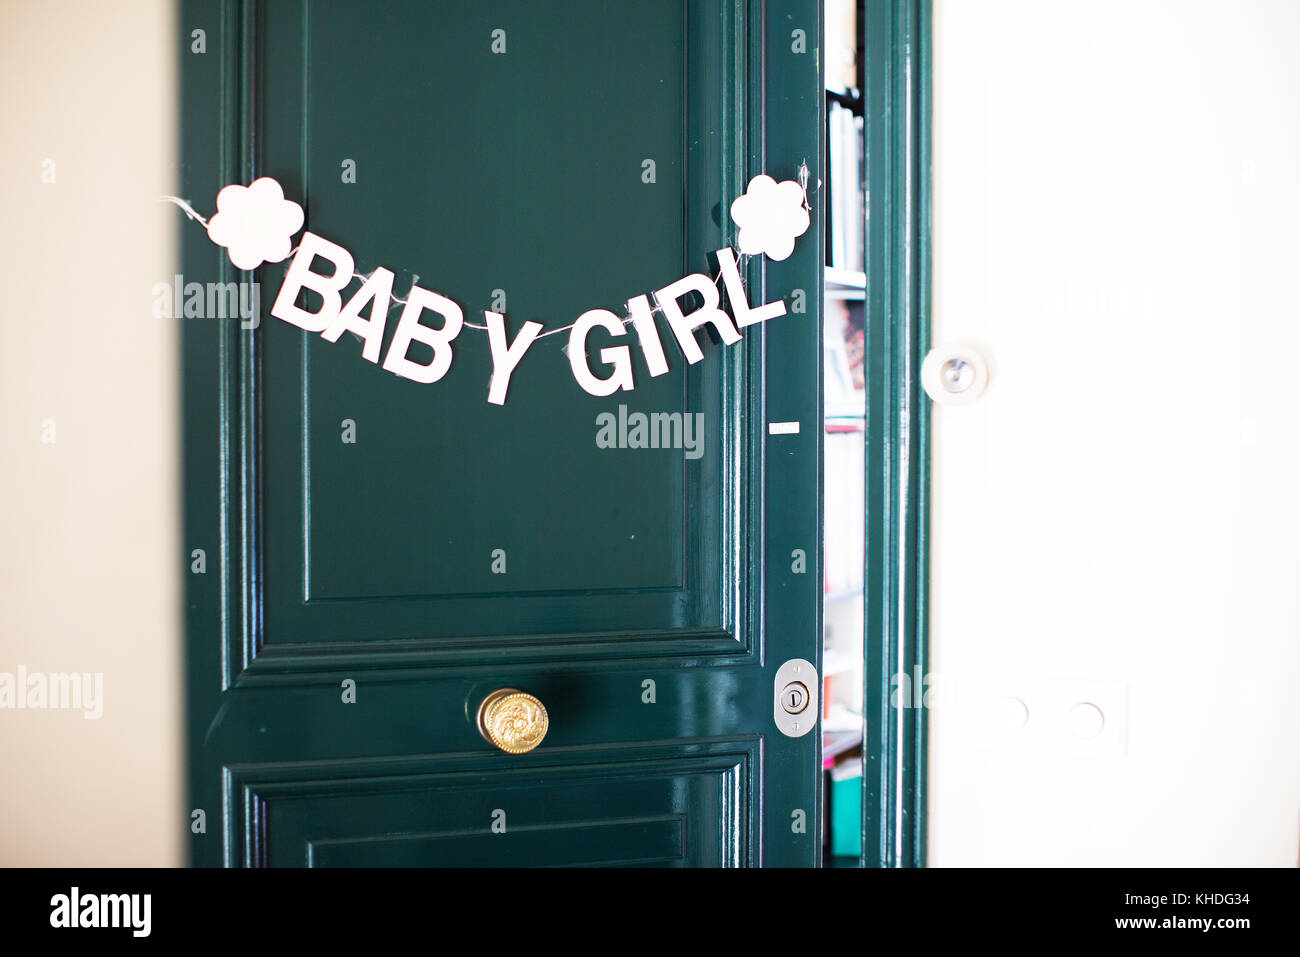 Bunting of baby girl hanging on door Stock Photo